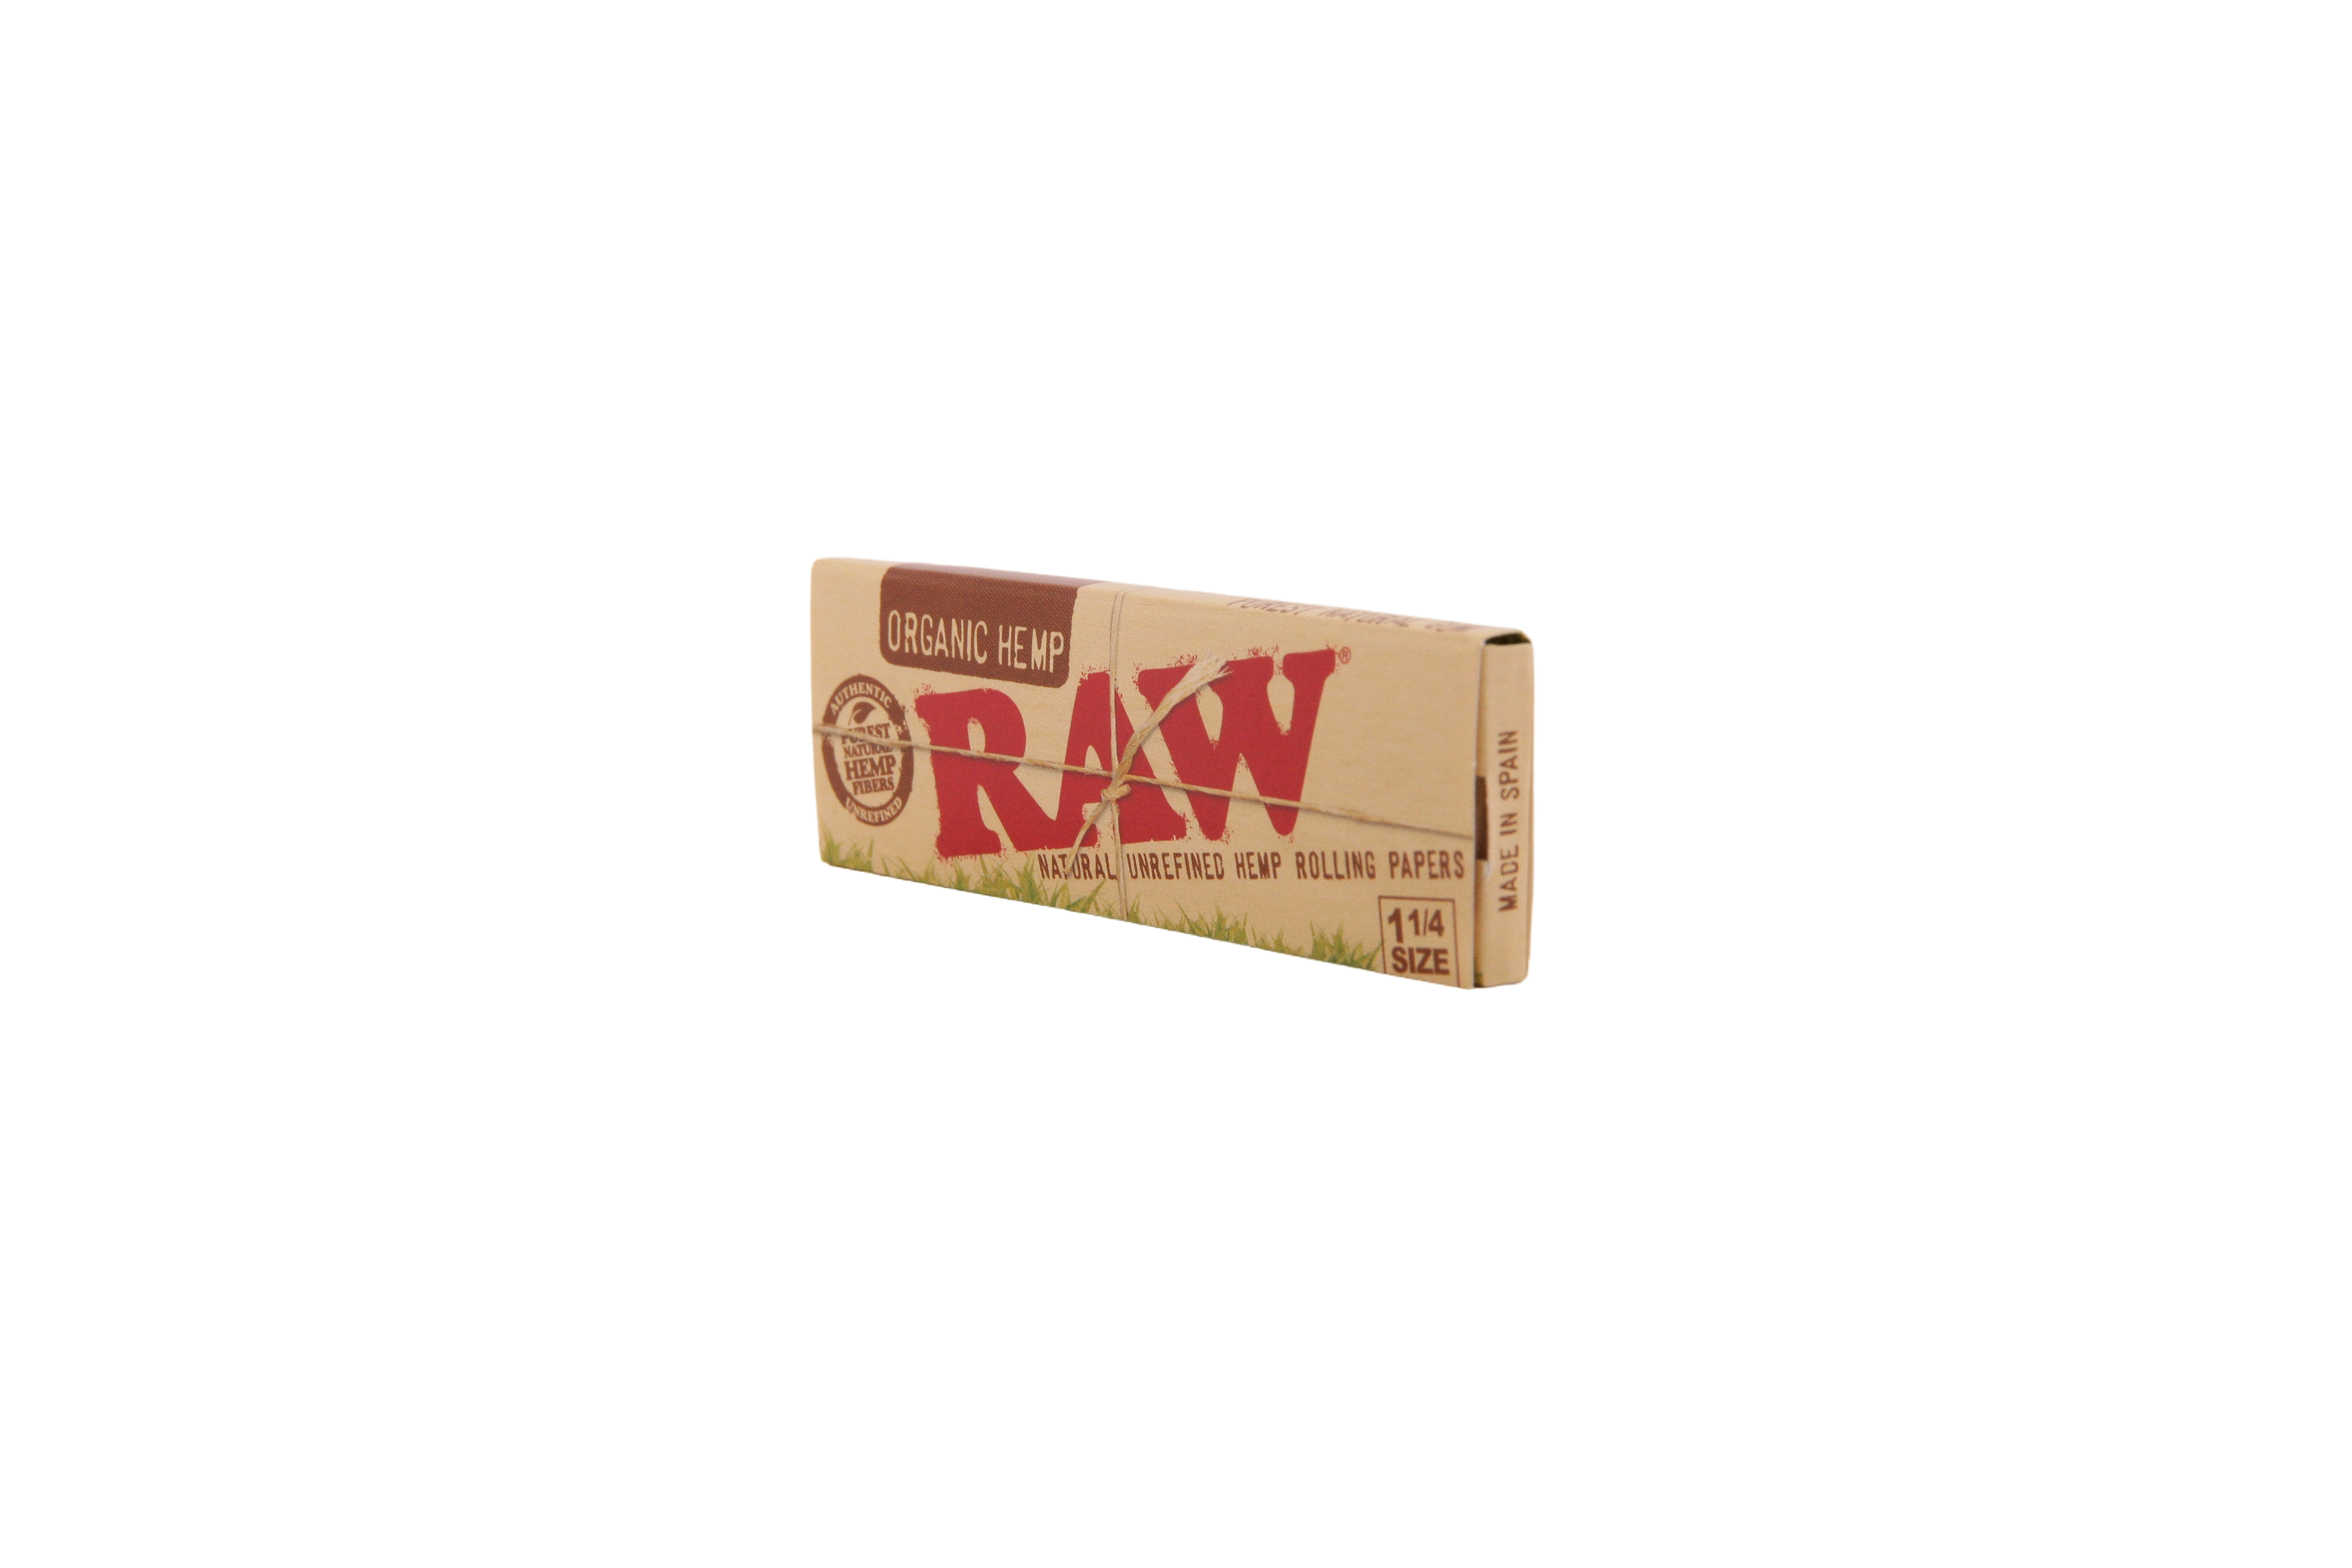 Raw Organic Hemp Papers - 1 1/4